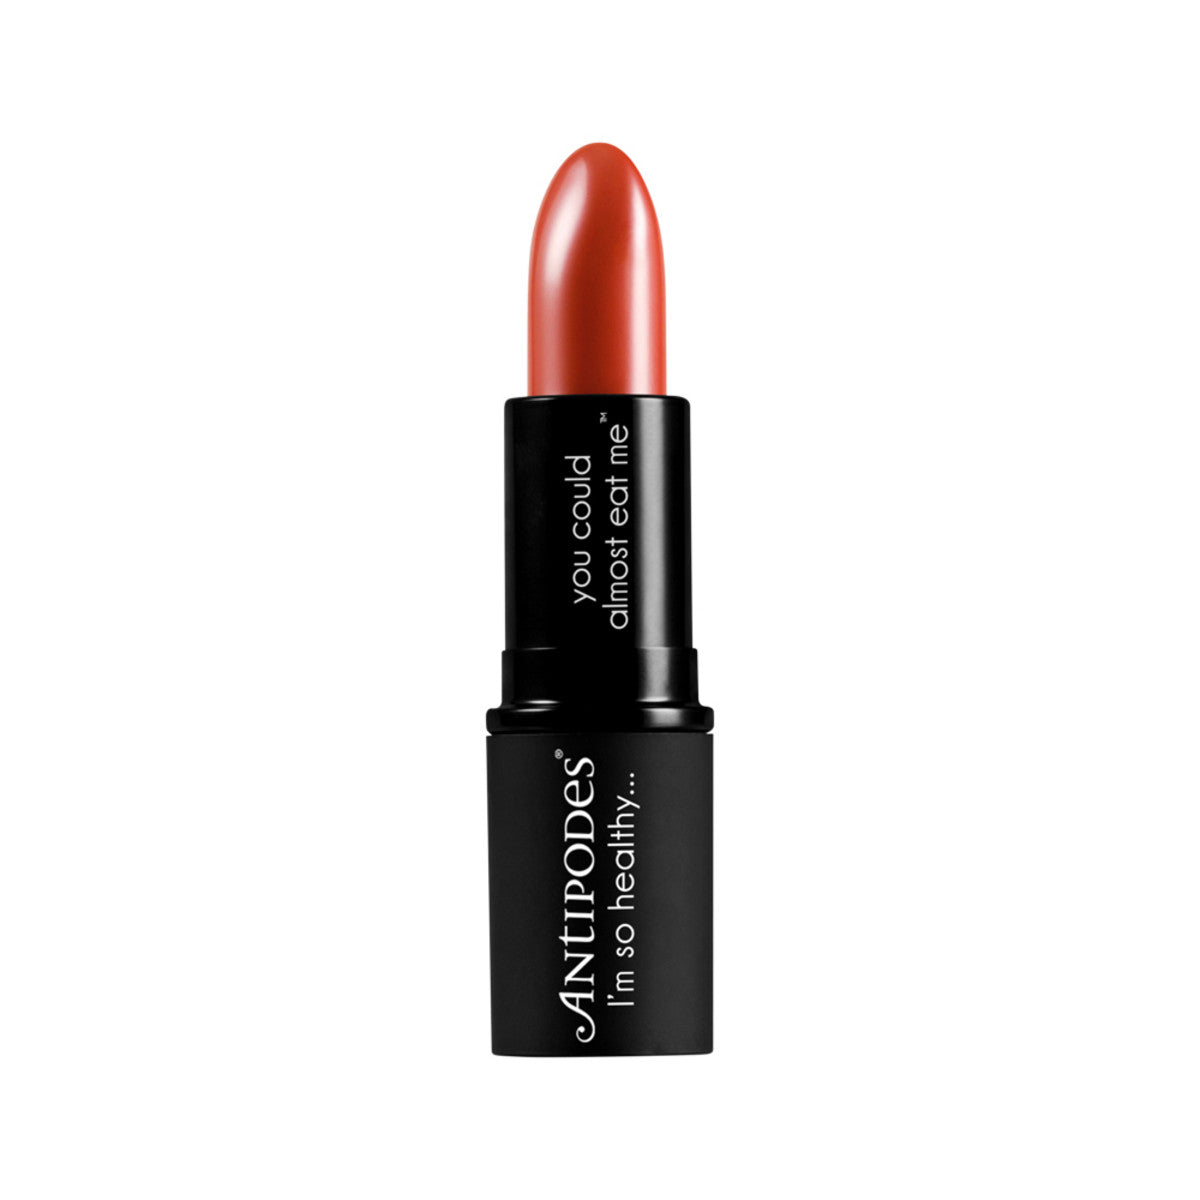 Antipodes Boom Rock Bronze Moisture-Boost Natural Lipstick 4g-The Living Co.